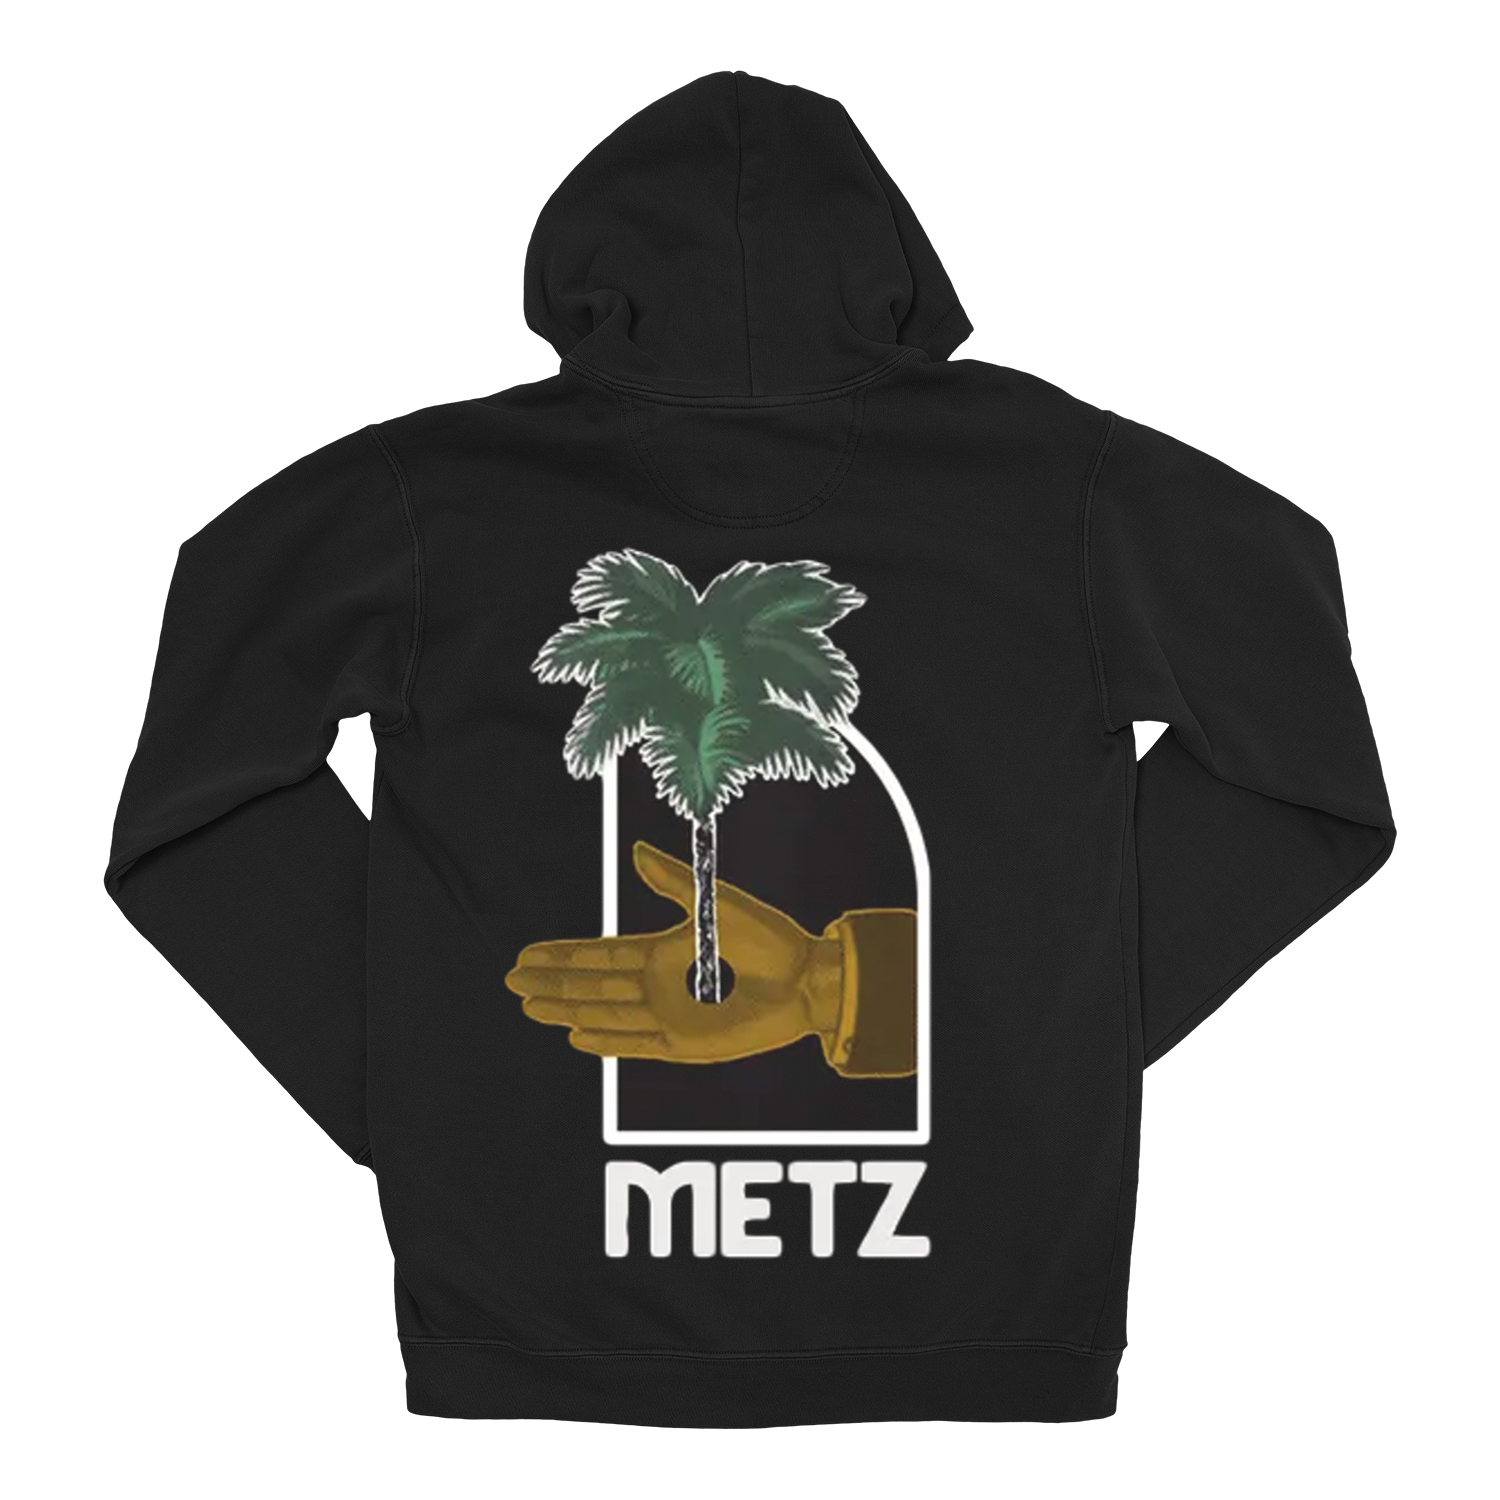 METZ "Palm" Black Hooded Sweatshirt (Final Run)